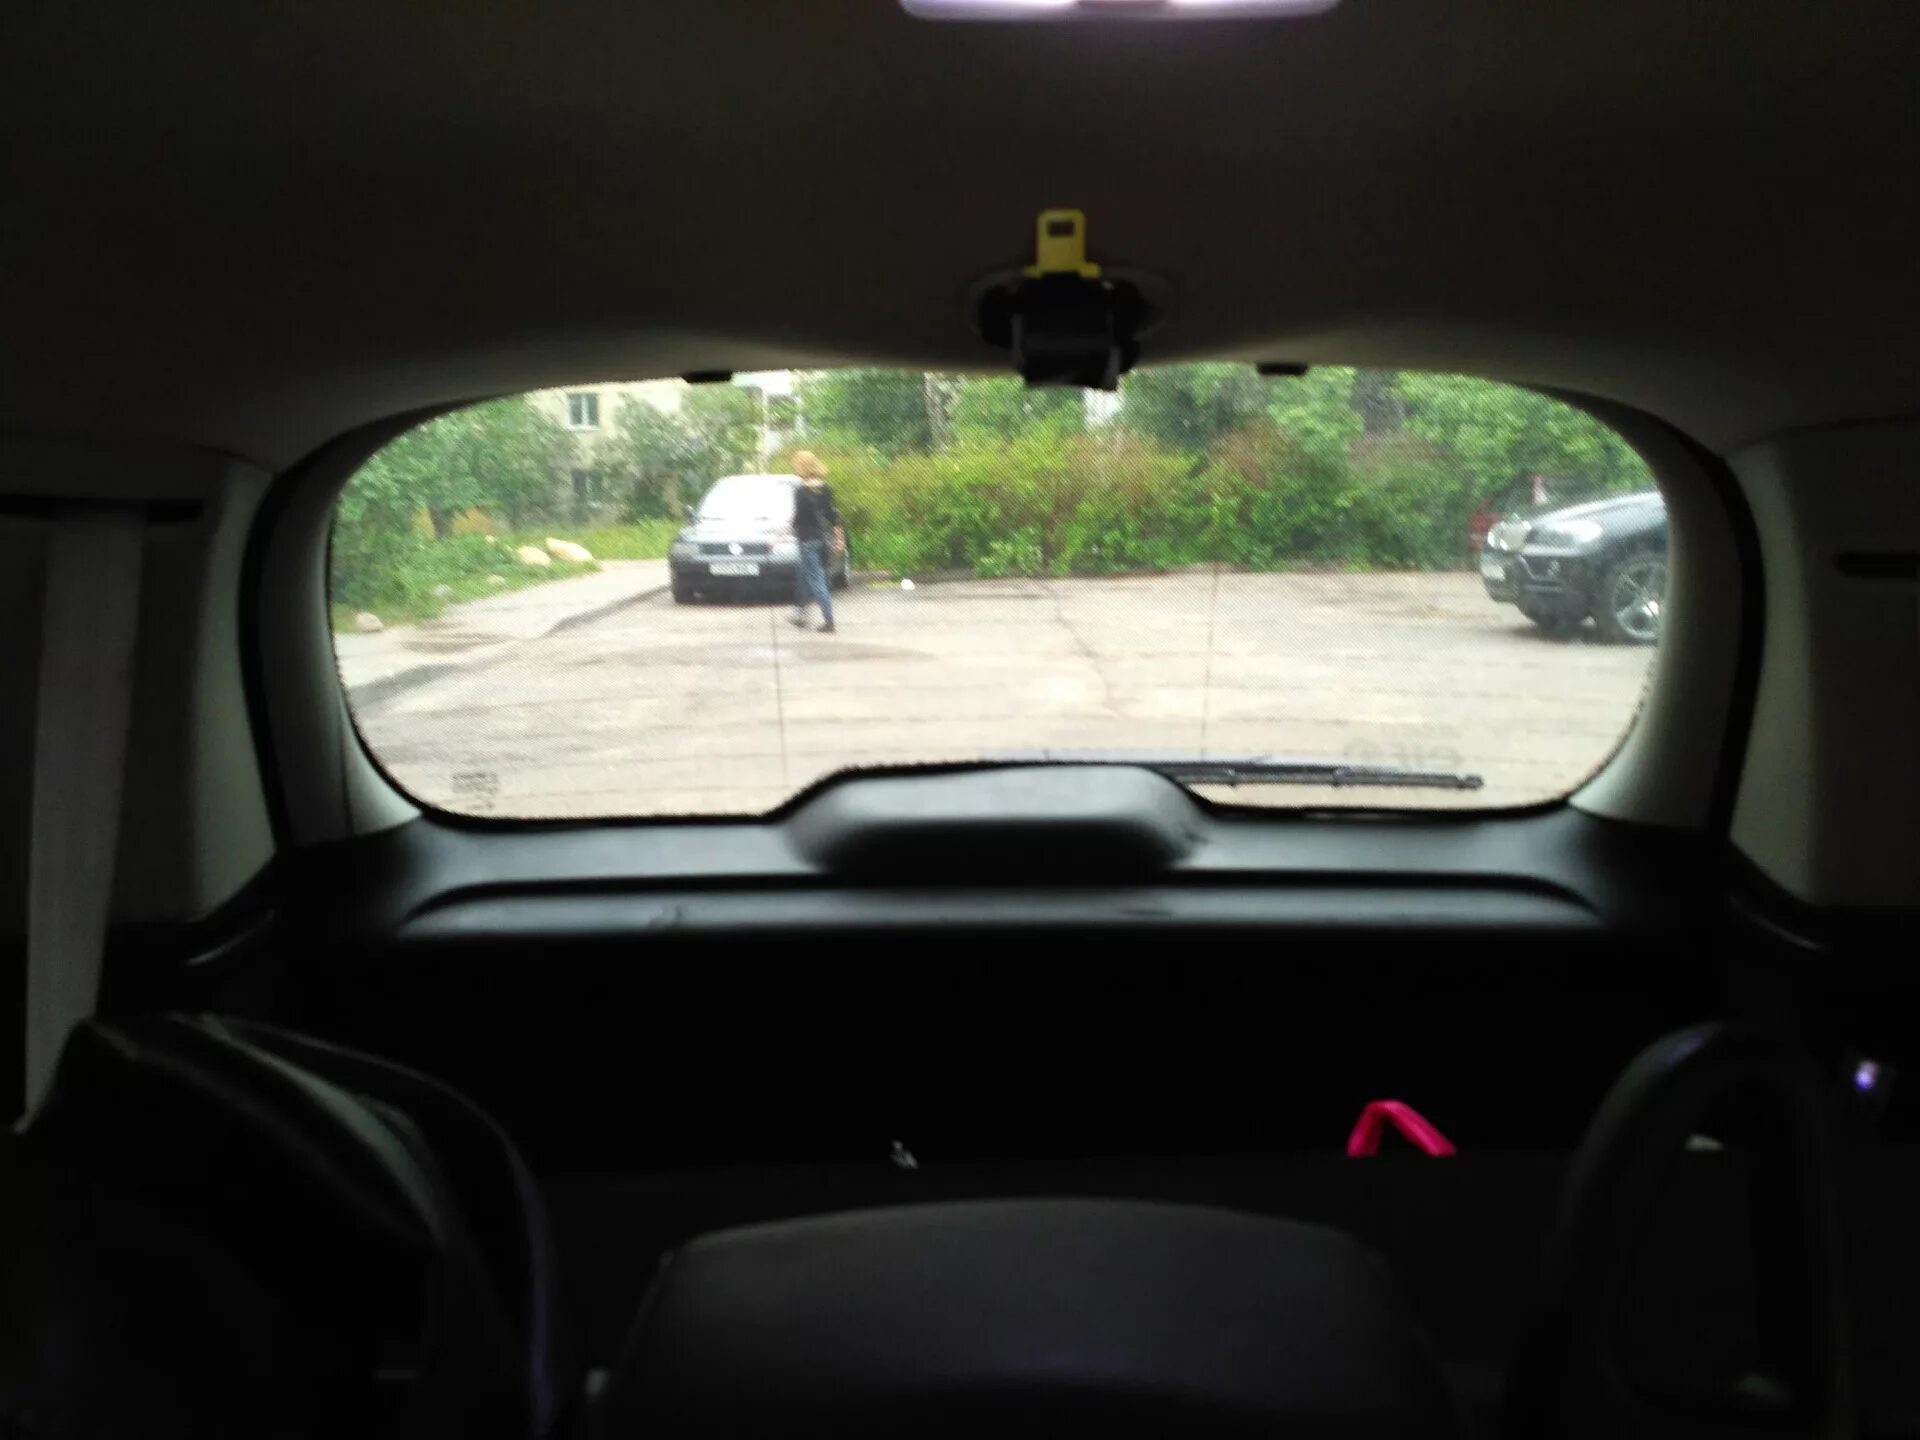 Шторка Renault Grand Scenic 3. Заднее окно автомобиля изнутри. Вид из лобового окна Рено Логан. Шторка на панель Renault Scenic 3. Renault окно